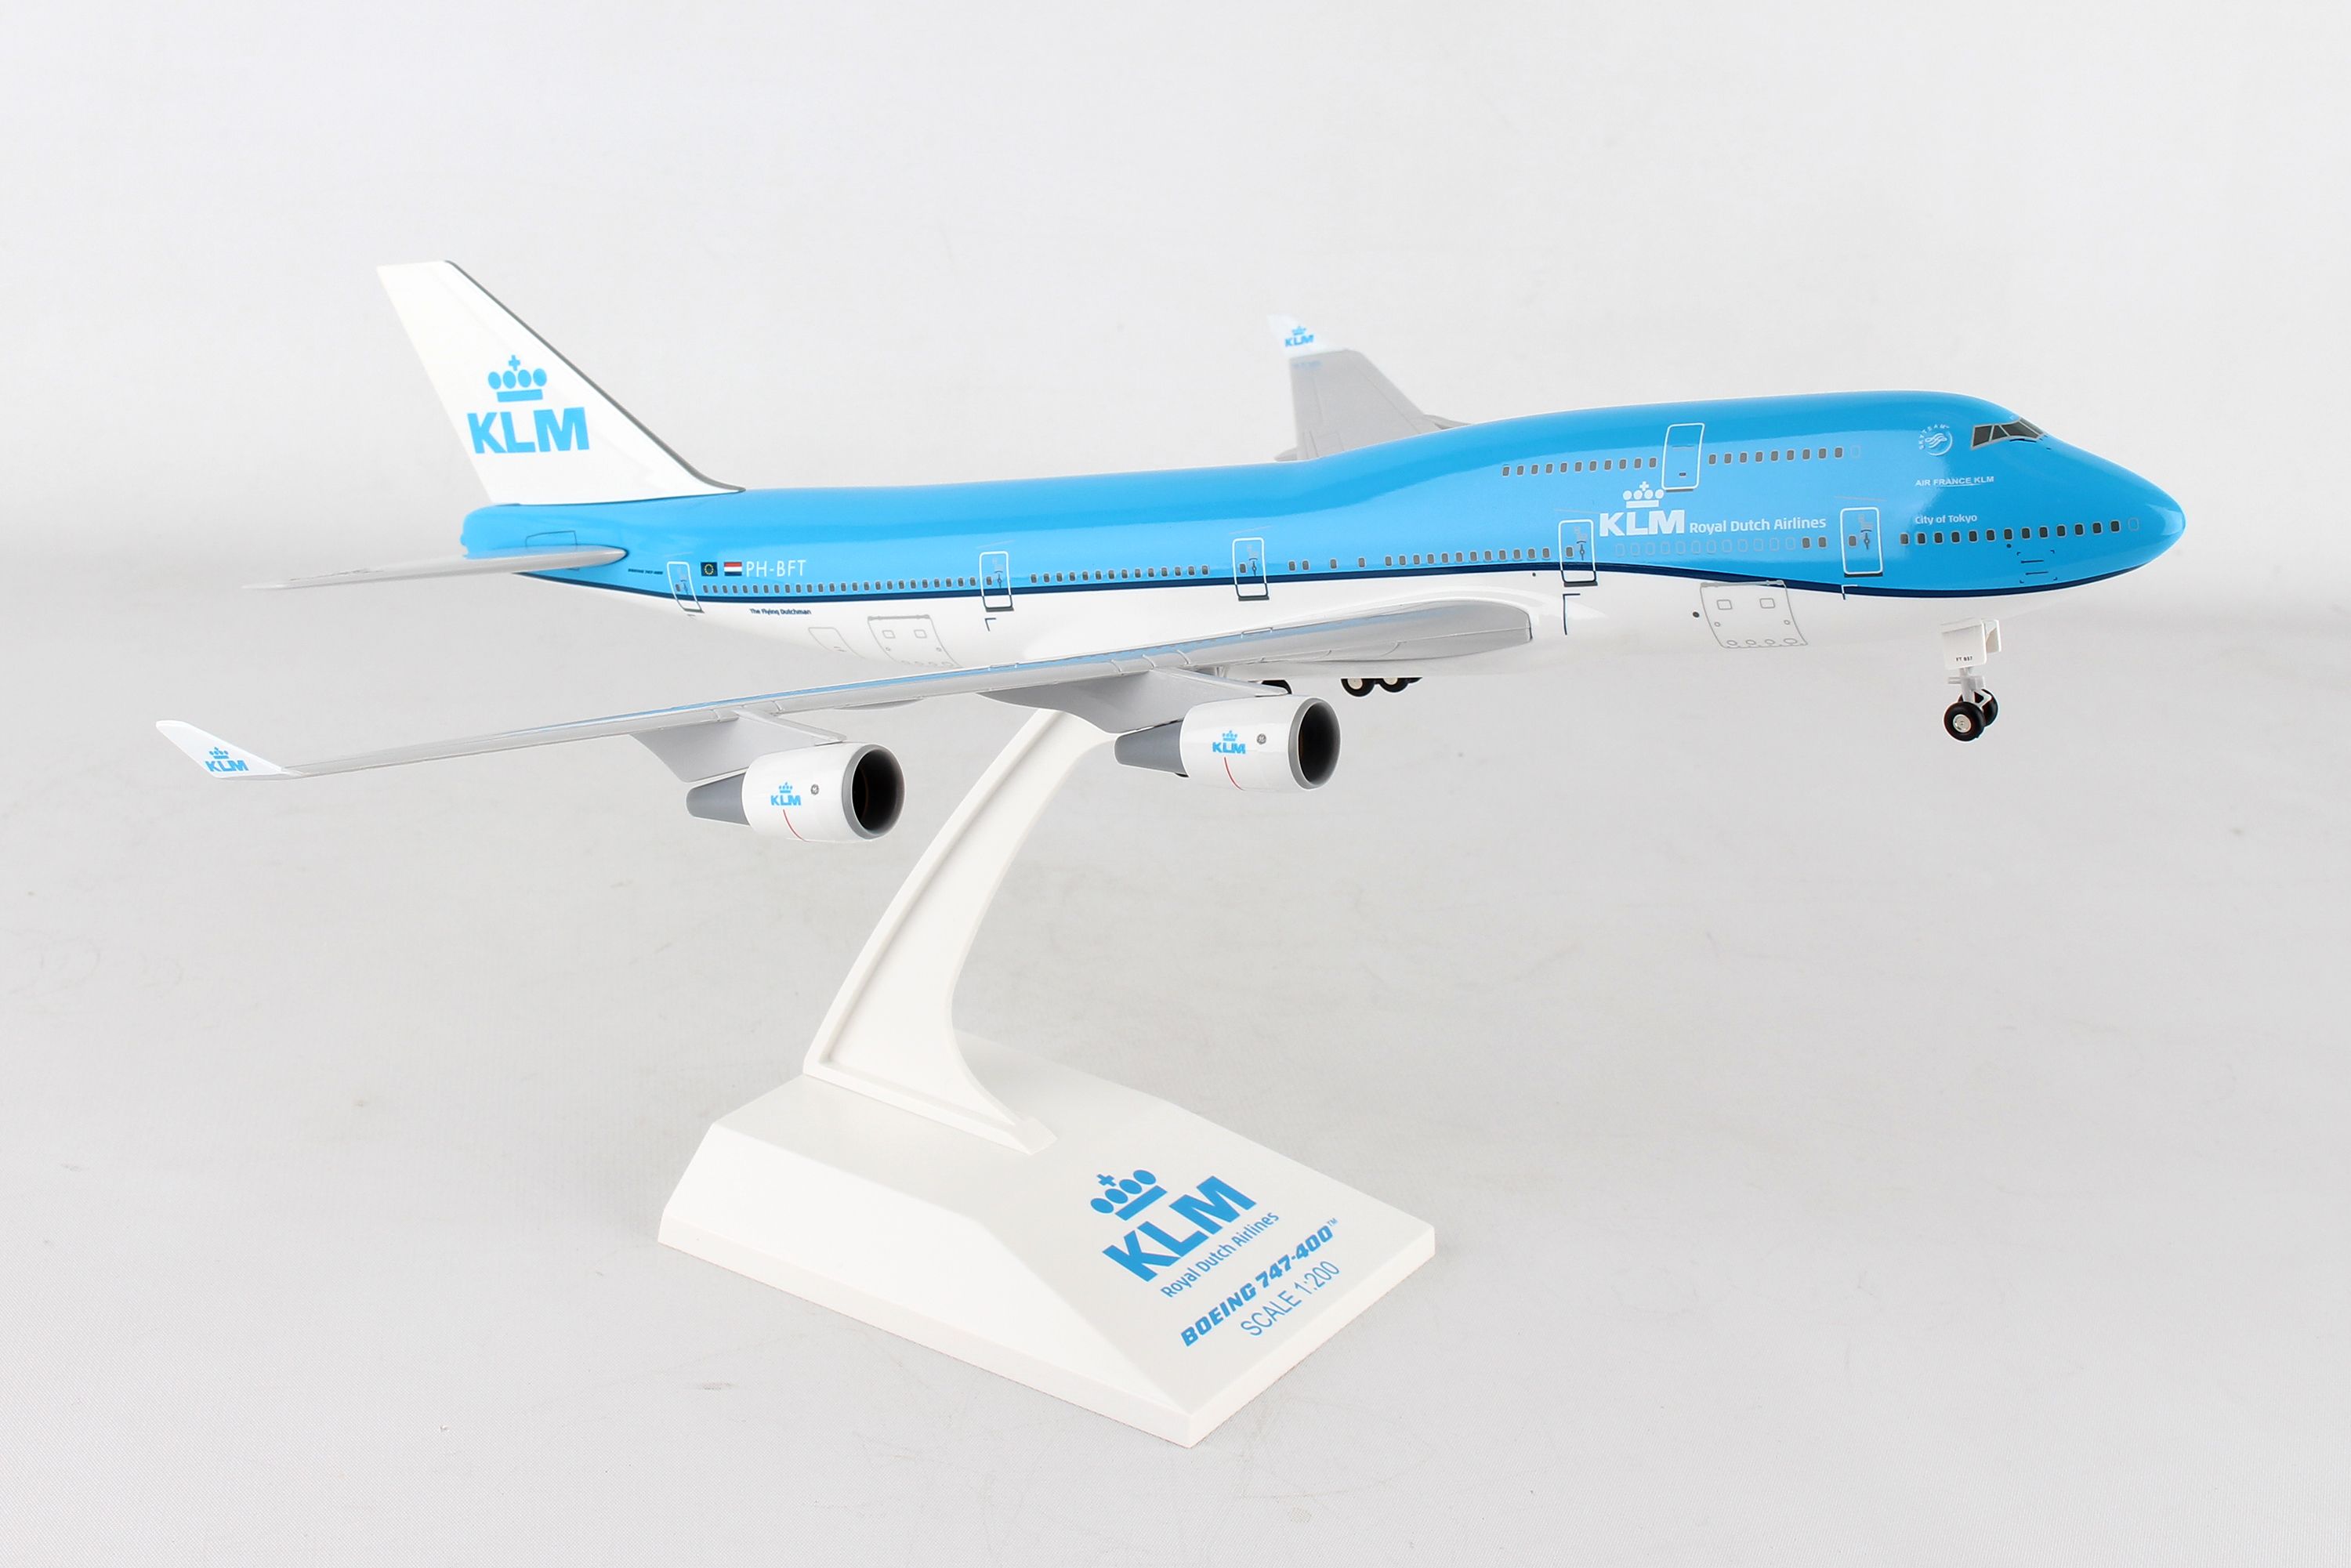 bewondering sturen Komst ScaleModelStore.com :: Skymarks 1:200 - SKR940 - KLM Royal Dutch Airlines  Boeing 747-400